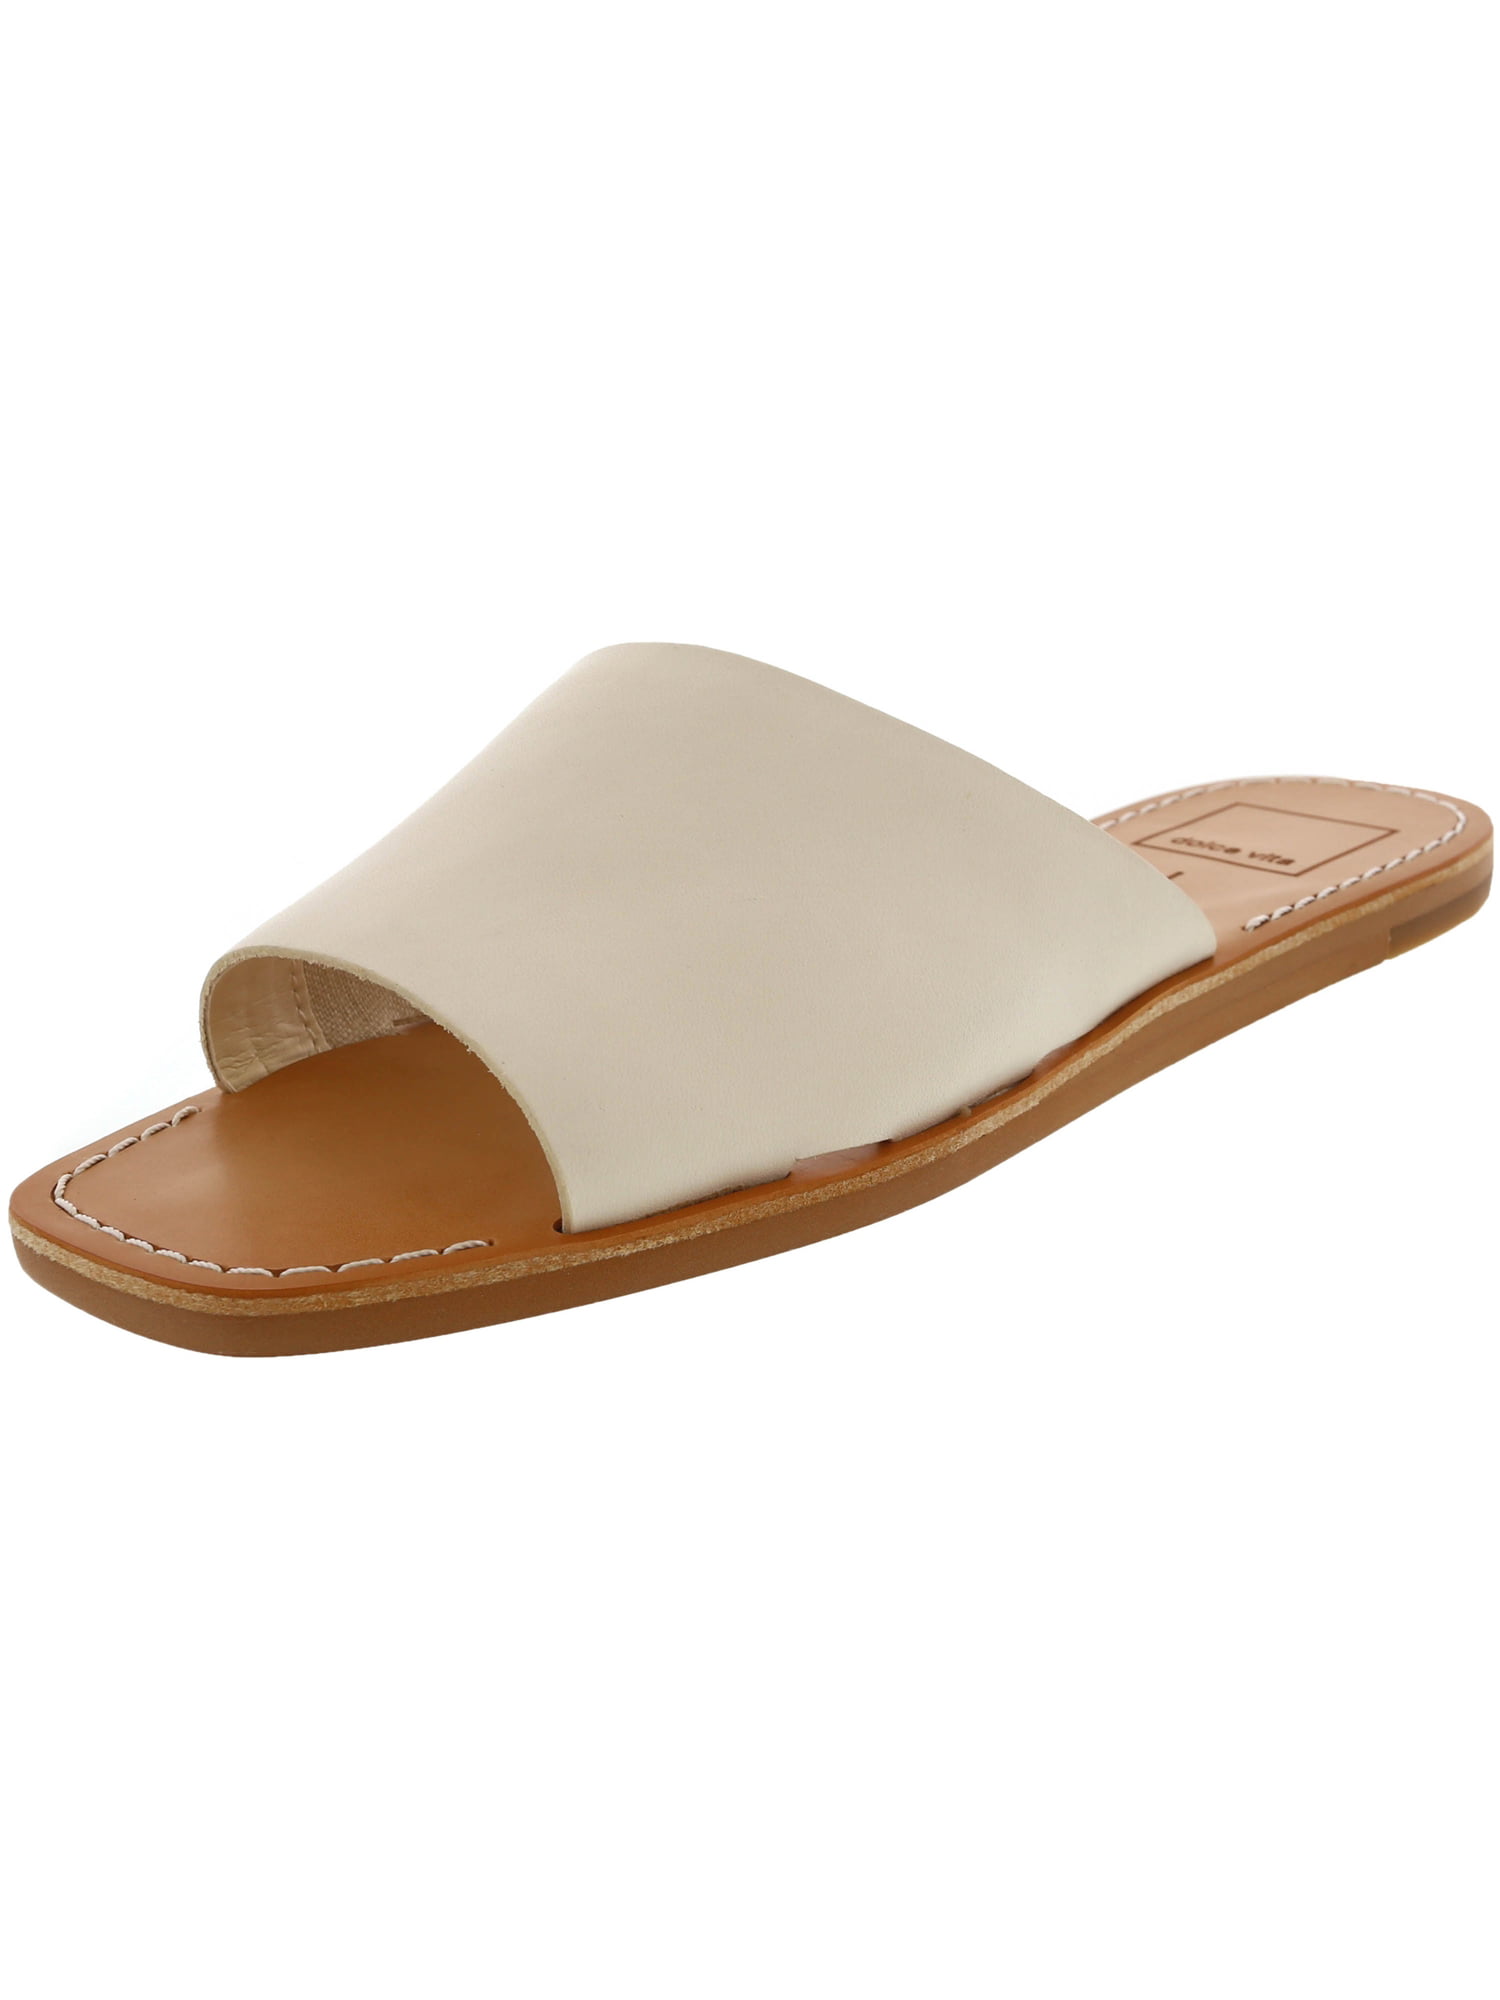 Dolce Vita - Dolce Vita Women's Cato Leather Off White Sandal - 8.5M ...